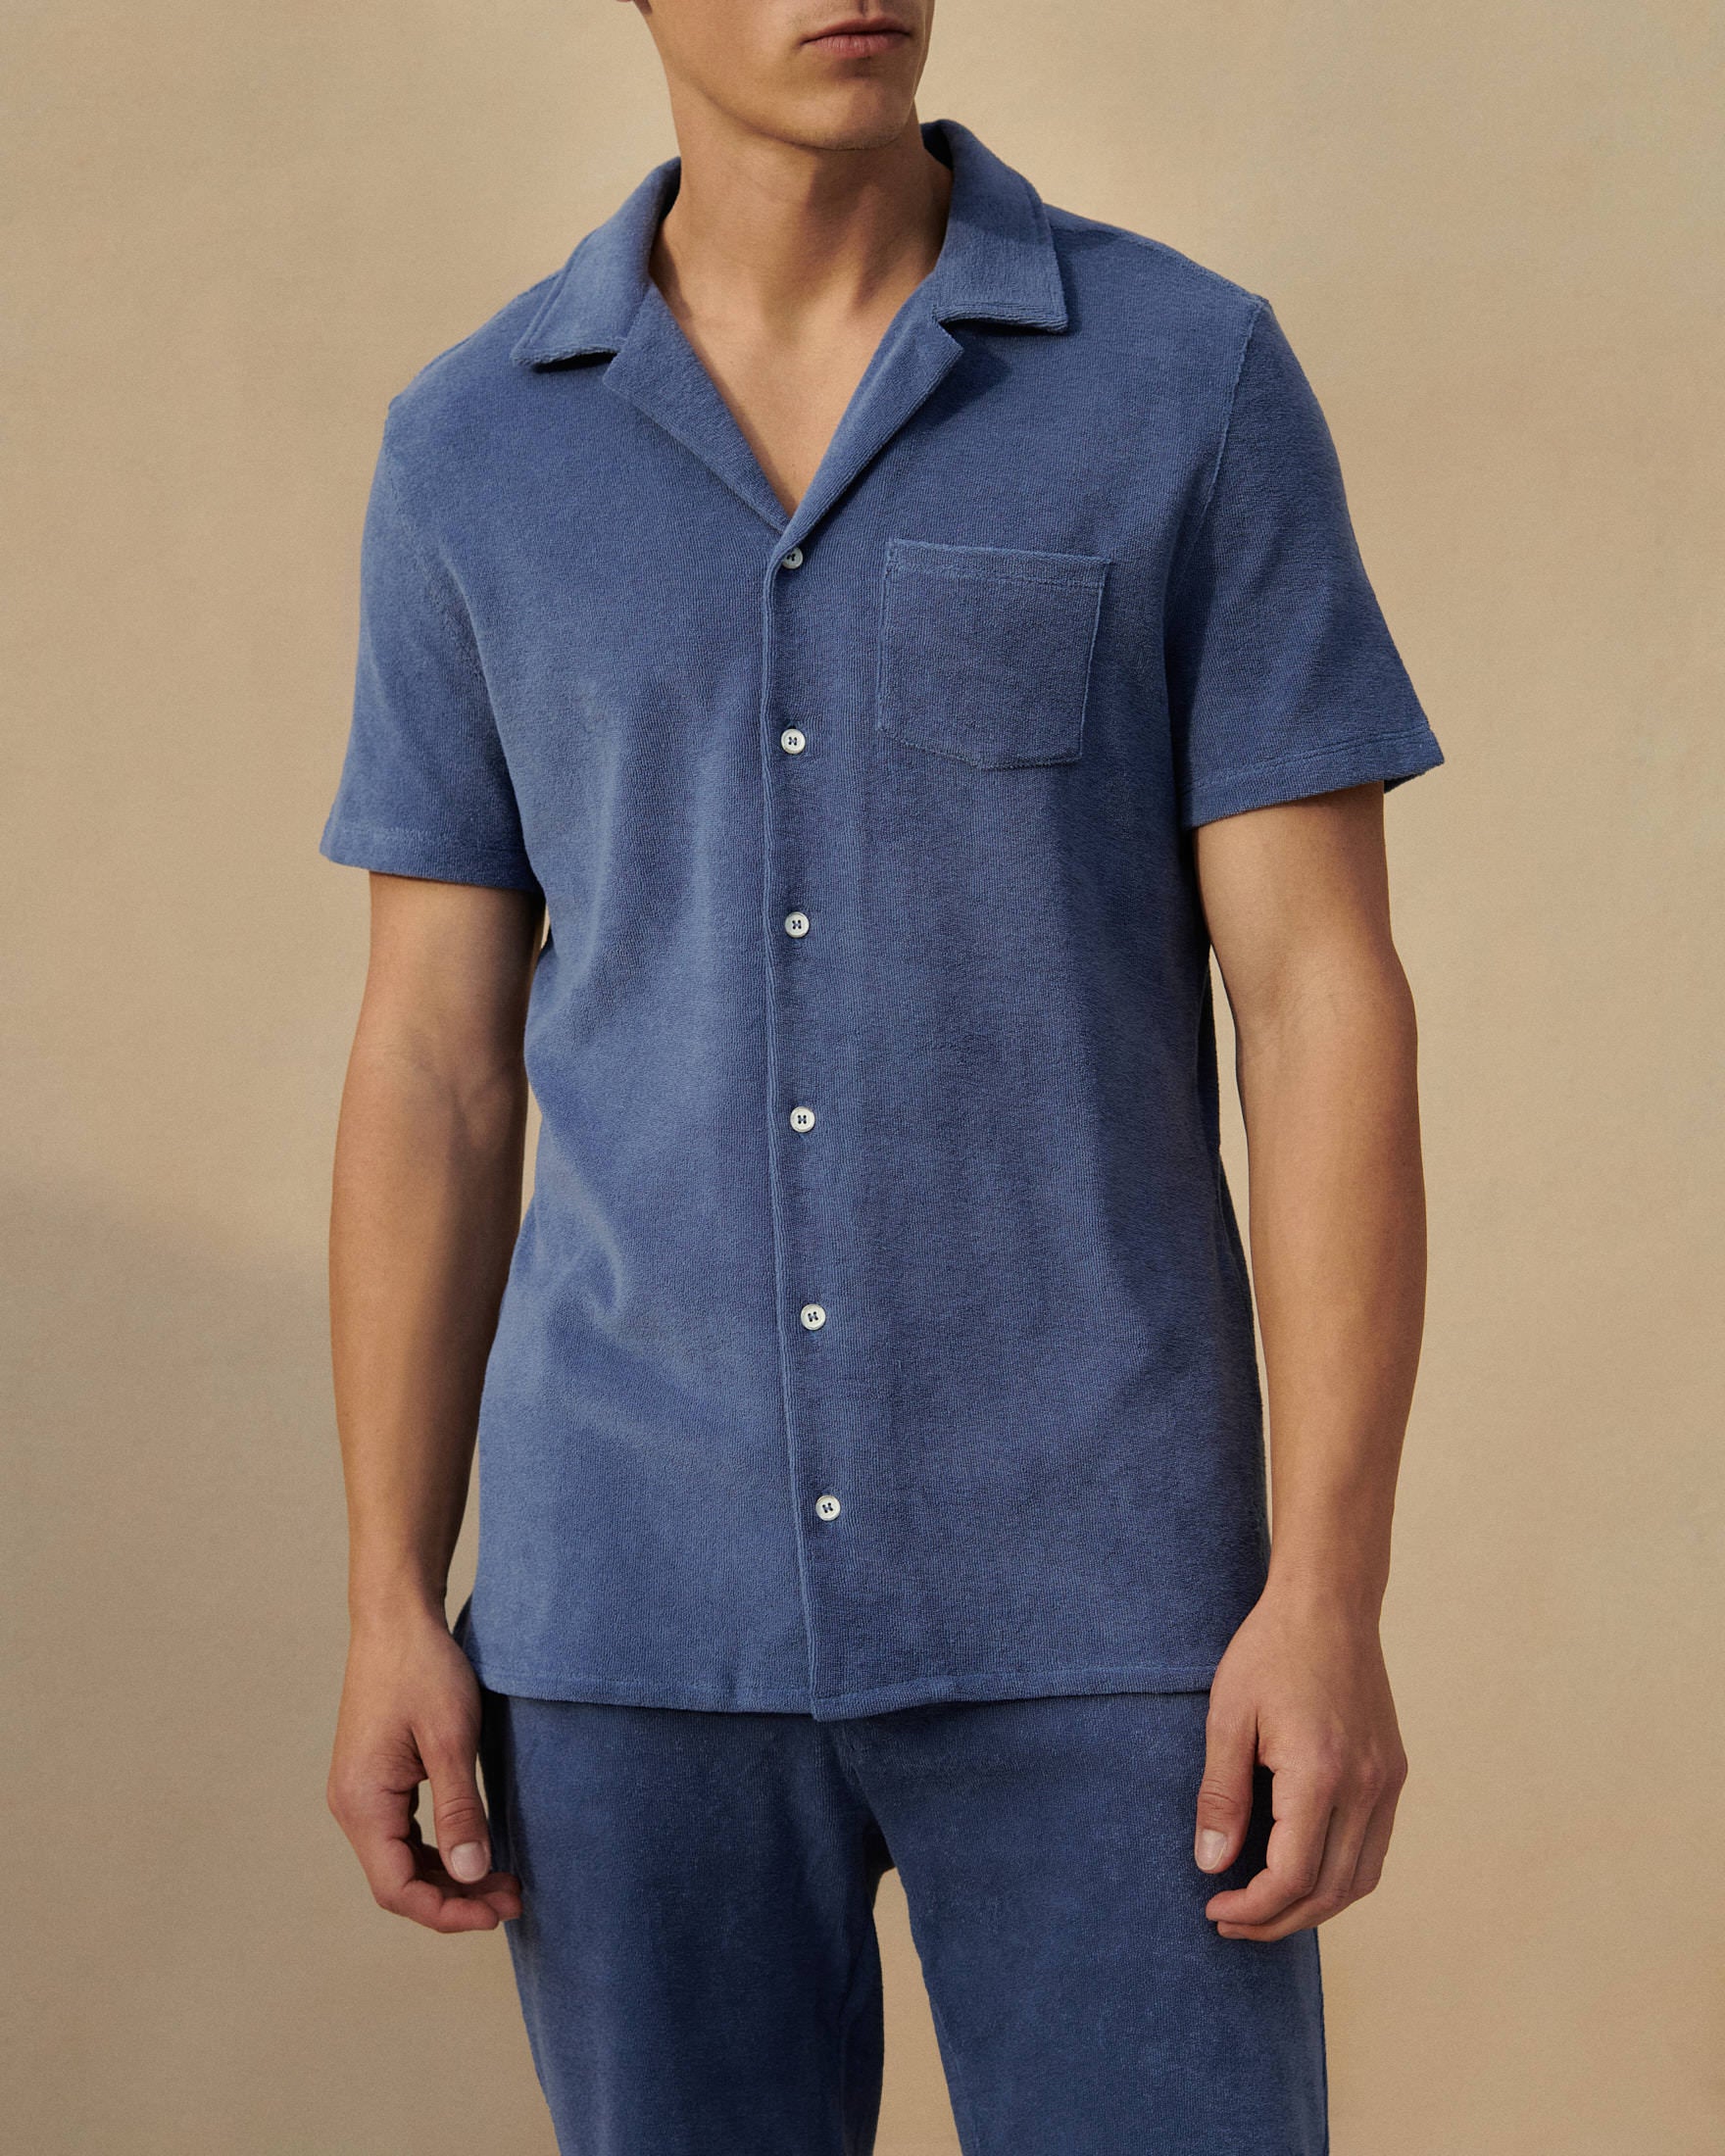 Organic Terry Cotton Luigi Shirt - Night Shadow Blue